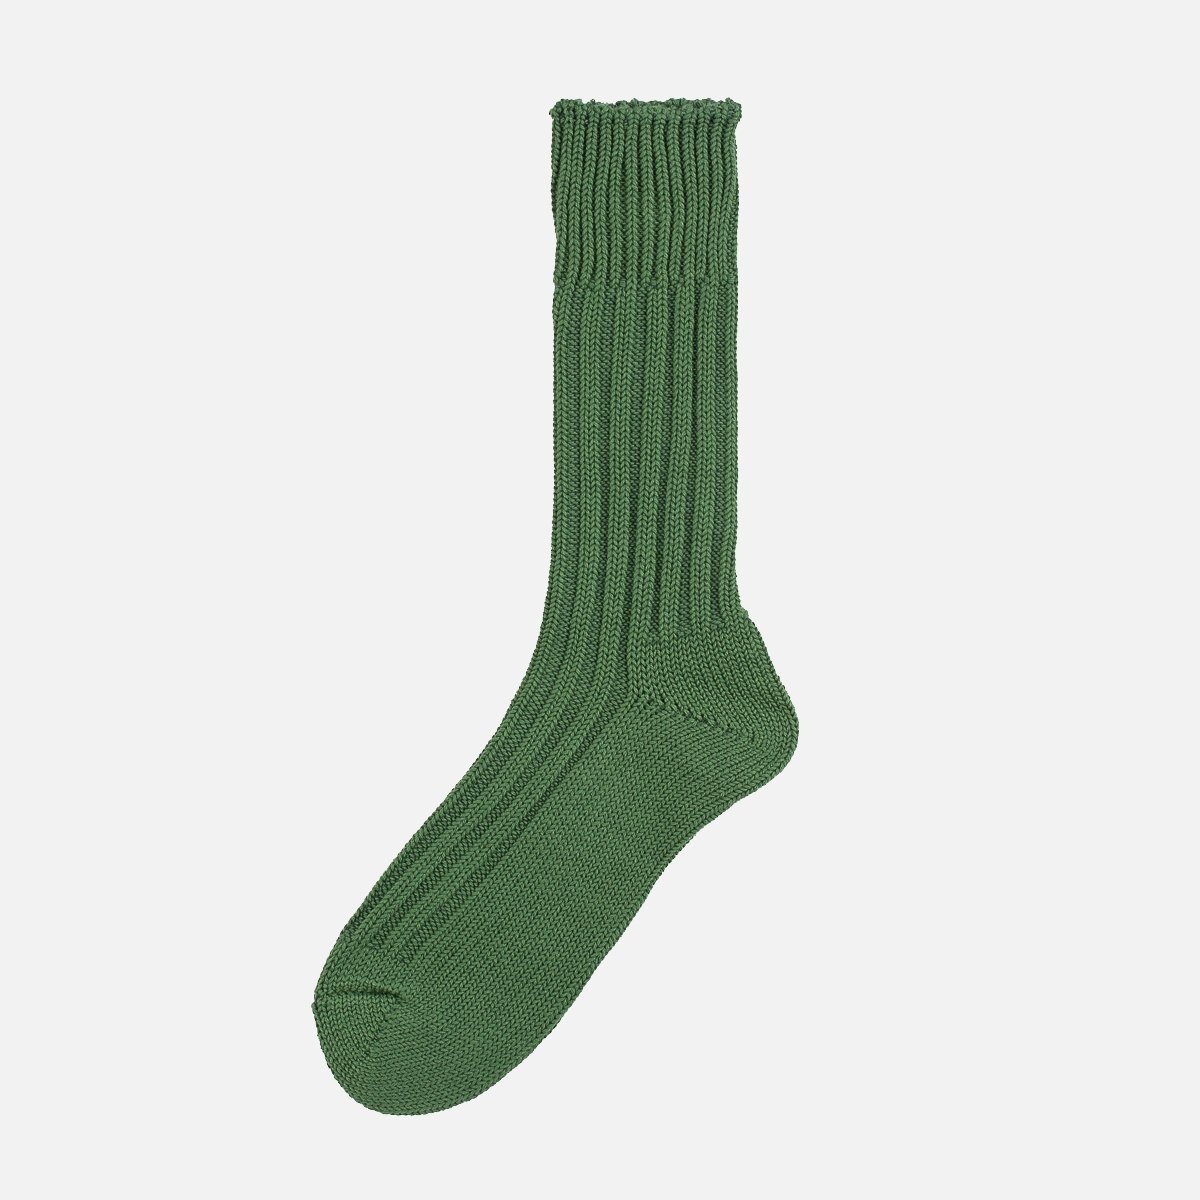 DEC-CAS-GRN Decka Cased Heavyweight Plain Socks - Green - 3